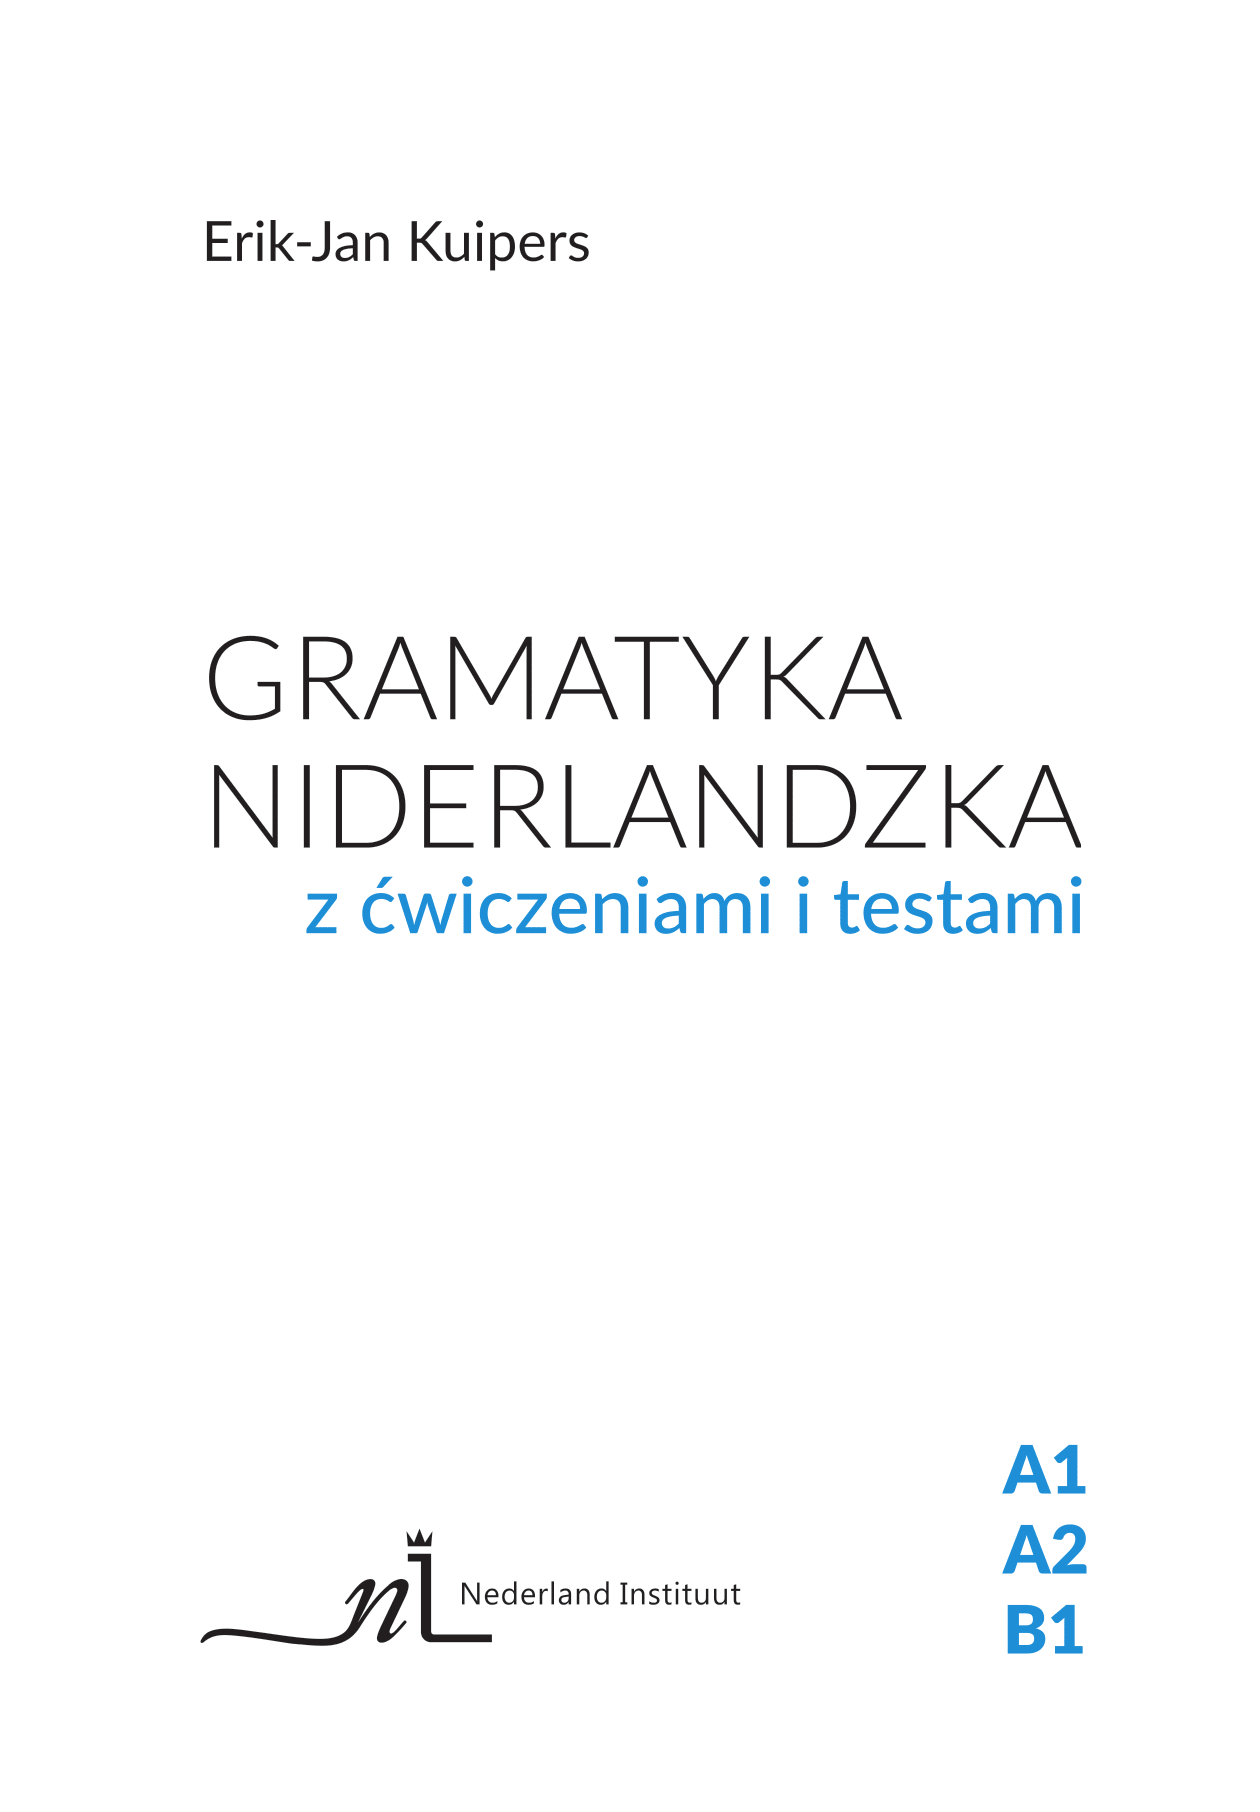 publuu_gramatyka-04.png